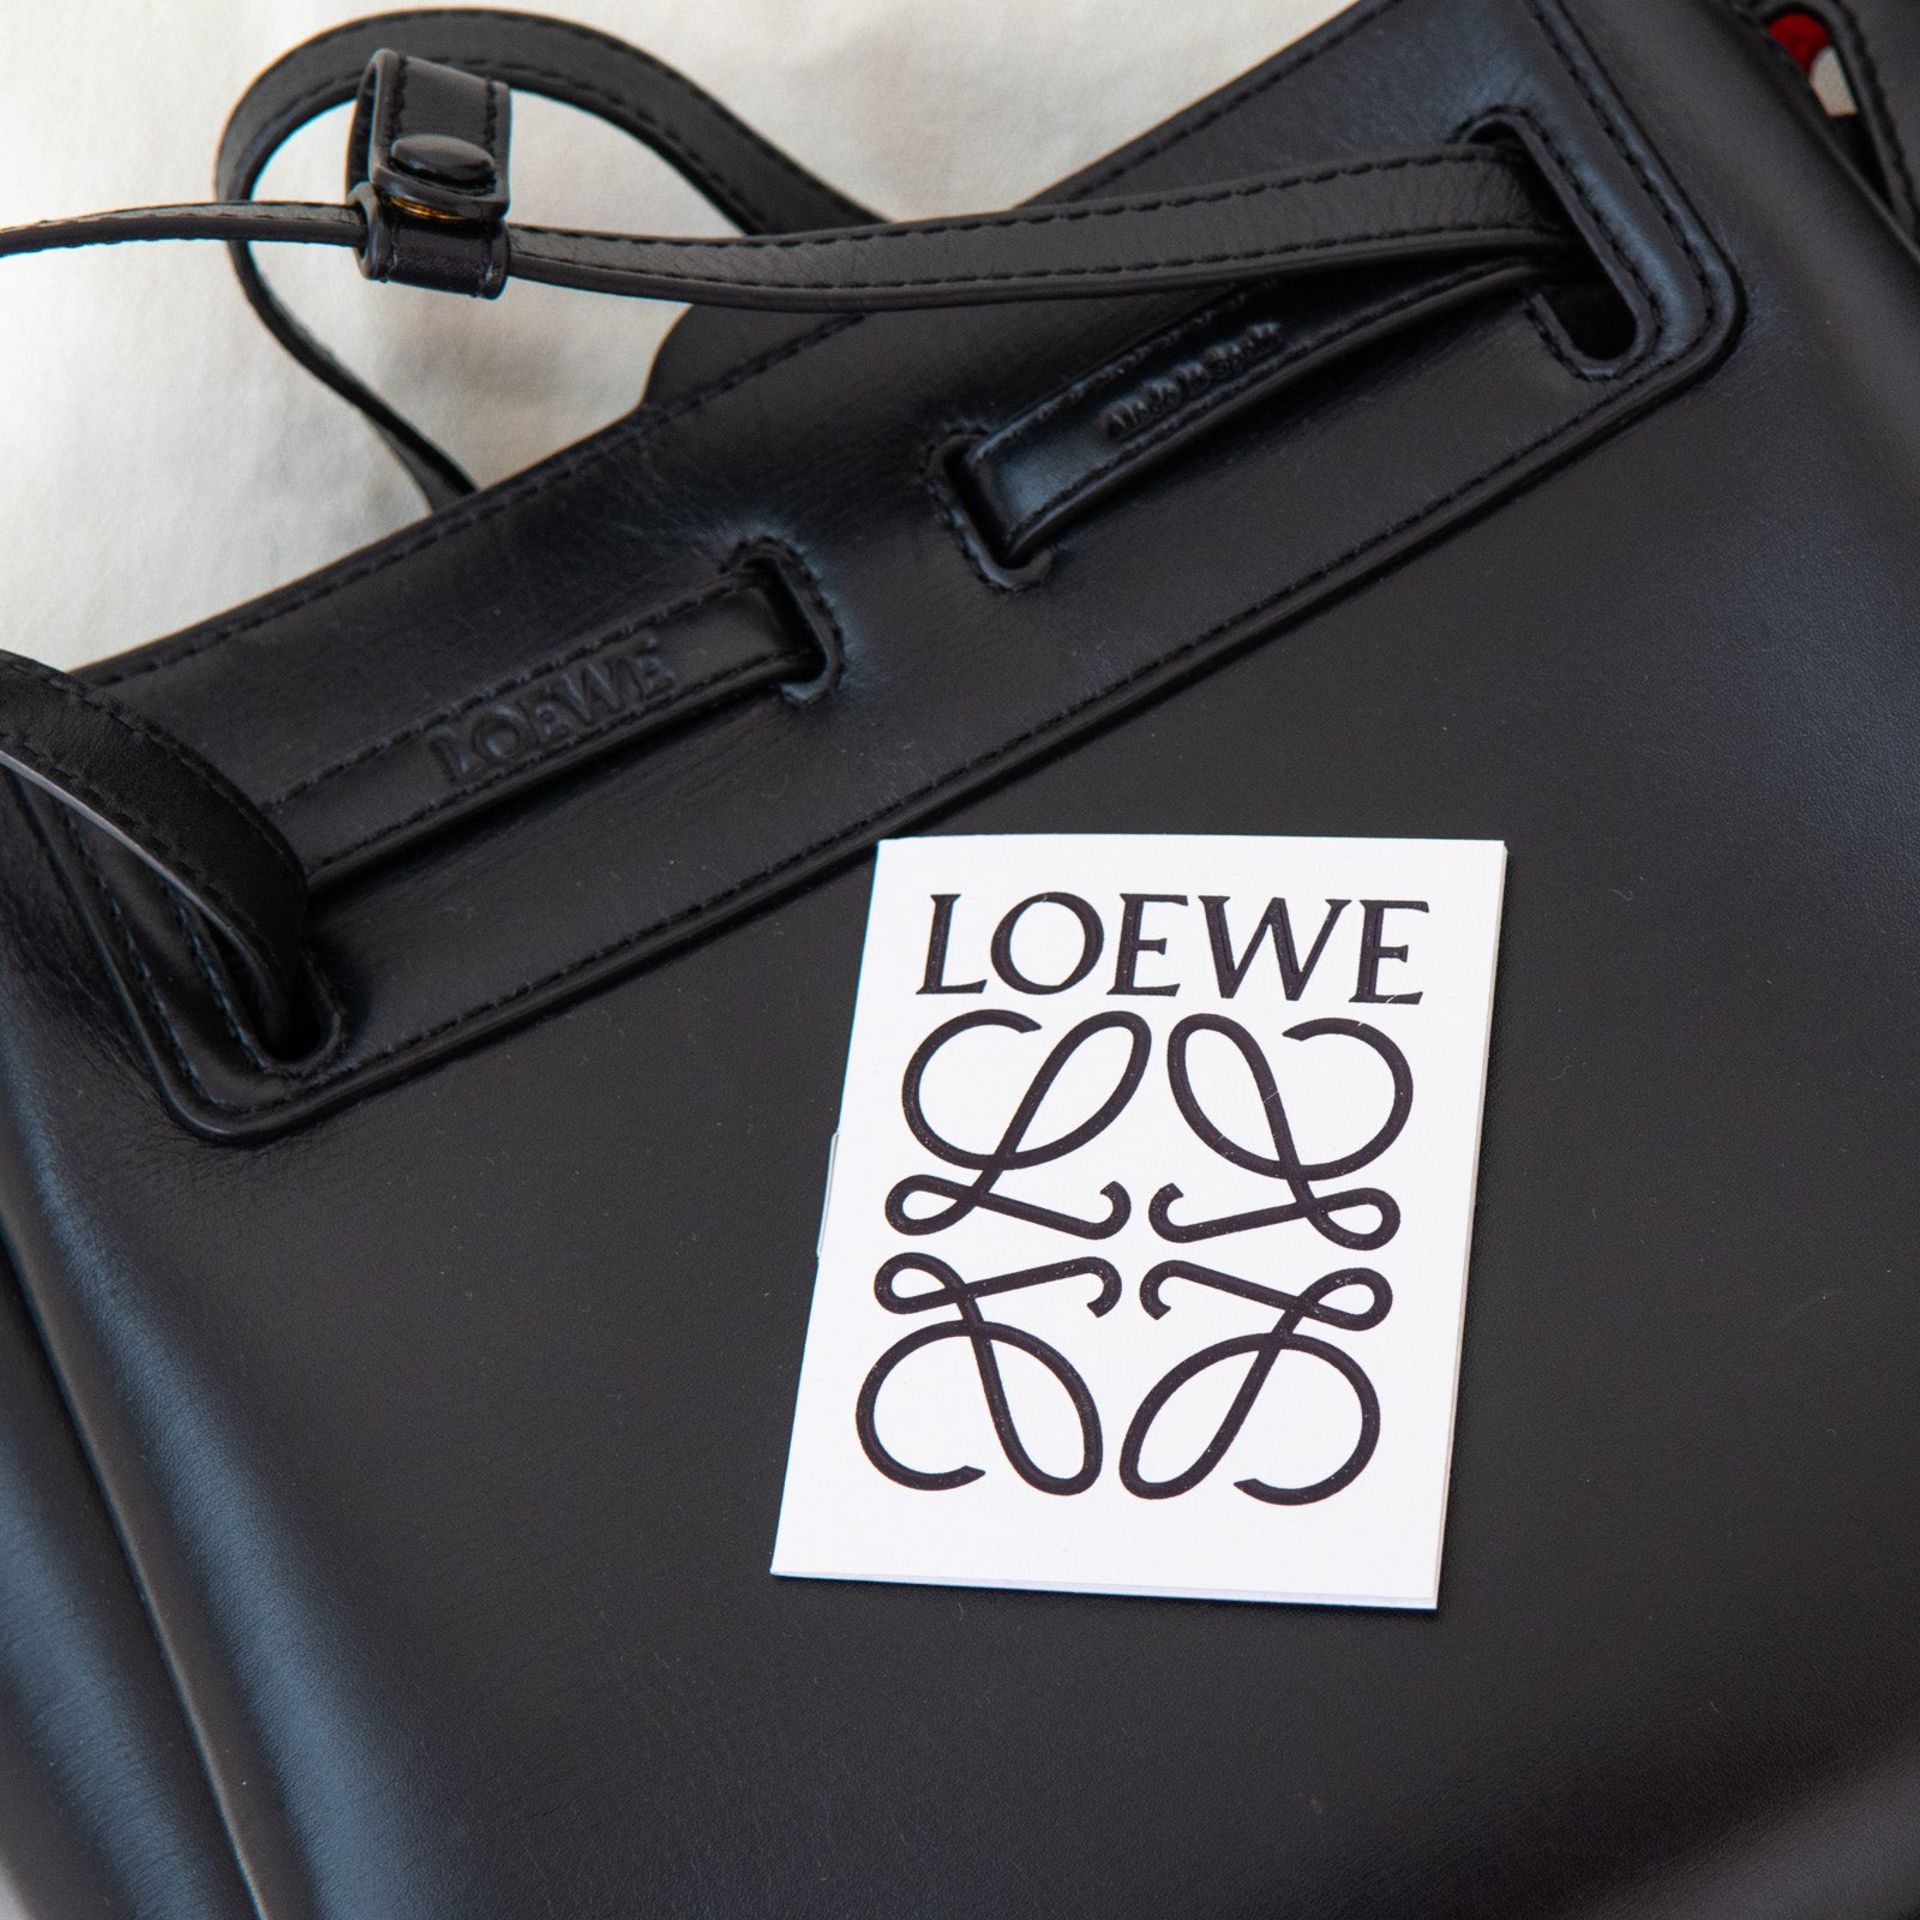 Loewe Lazo Black Leather Bag - Image 8 of 9